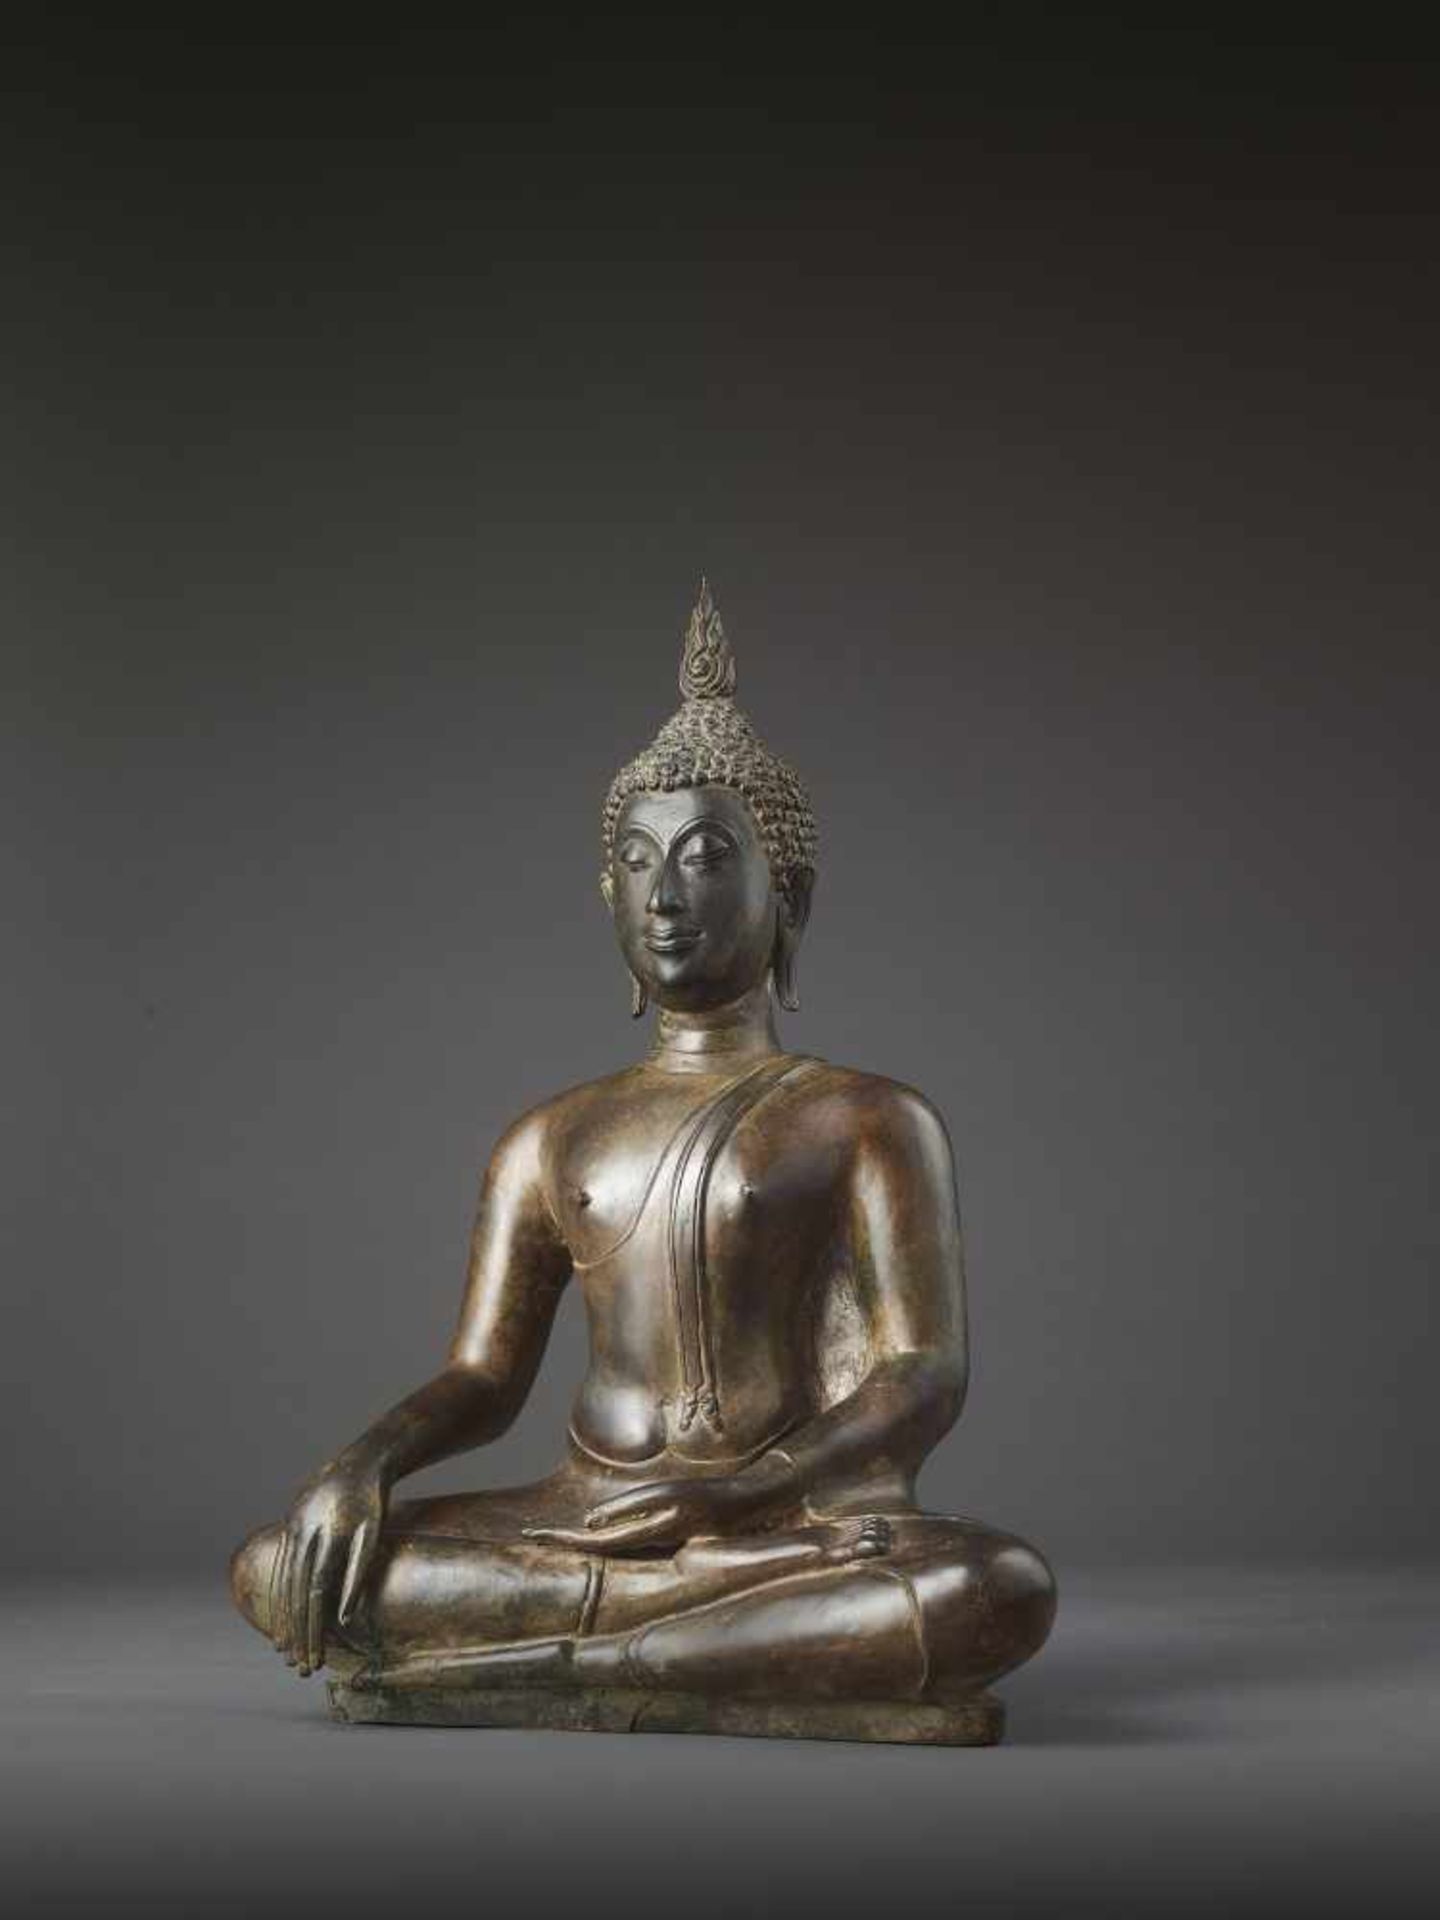 A LARGE SUKHOTHAI BUDDHA SHAKYAMUNIThailand, Sukhothai period, 15th-16th century. Cast bronze with